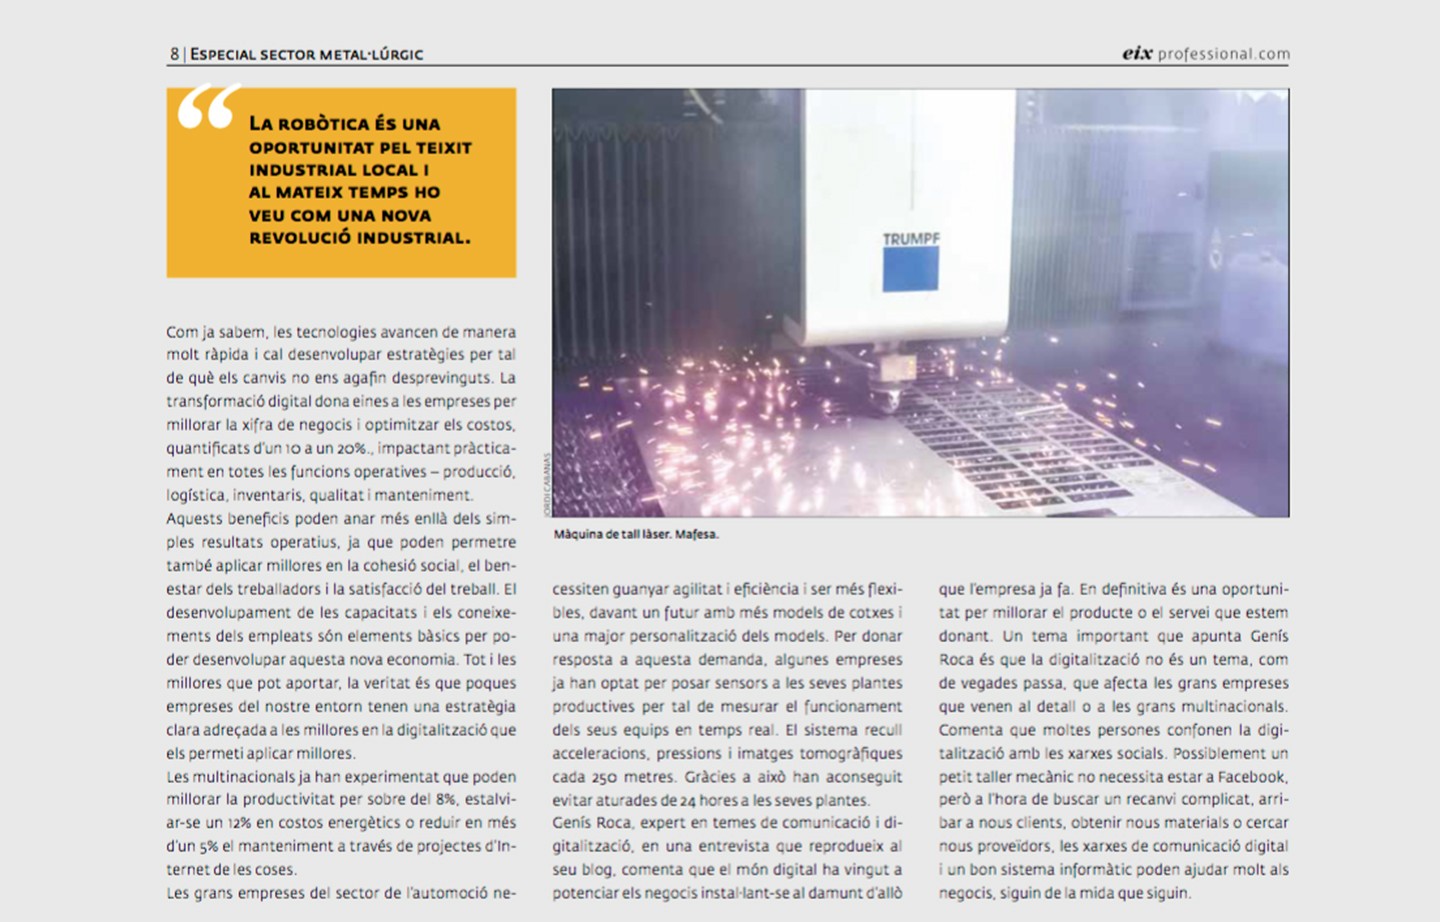 Mafesa with the metallurgy, in Eix professional magazine